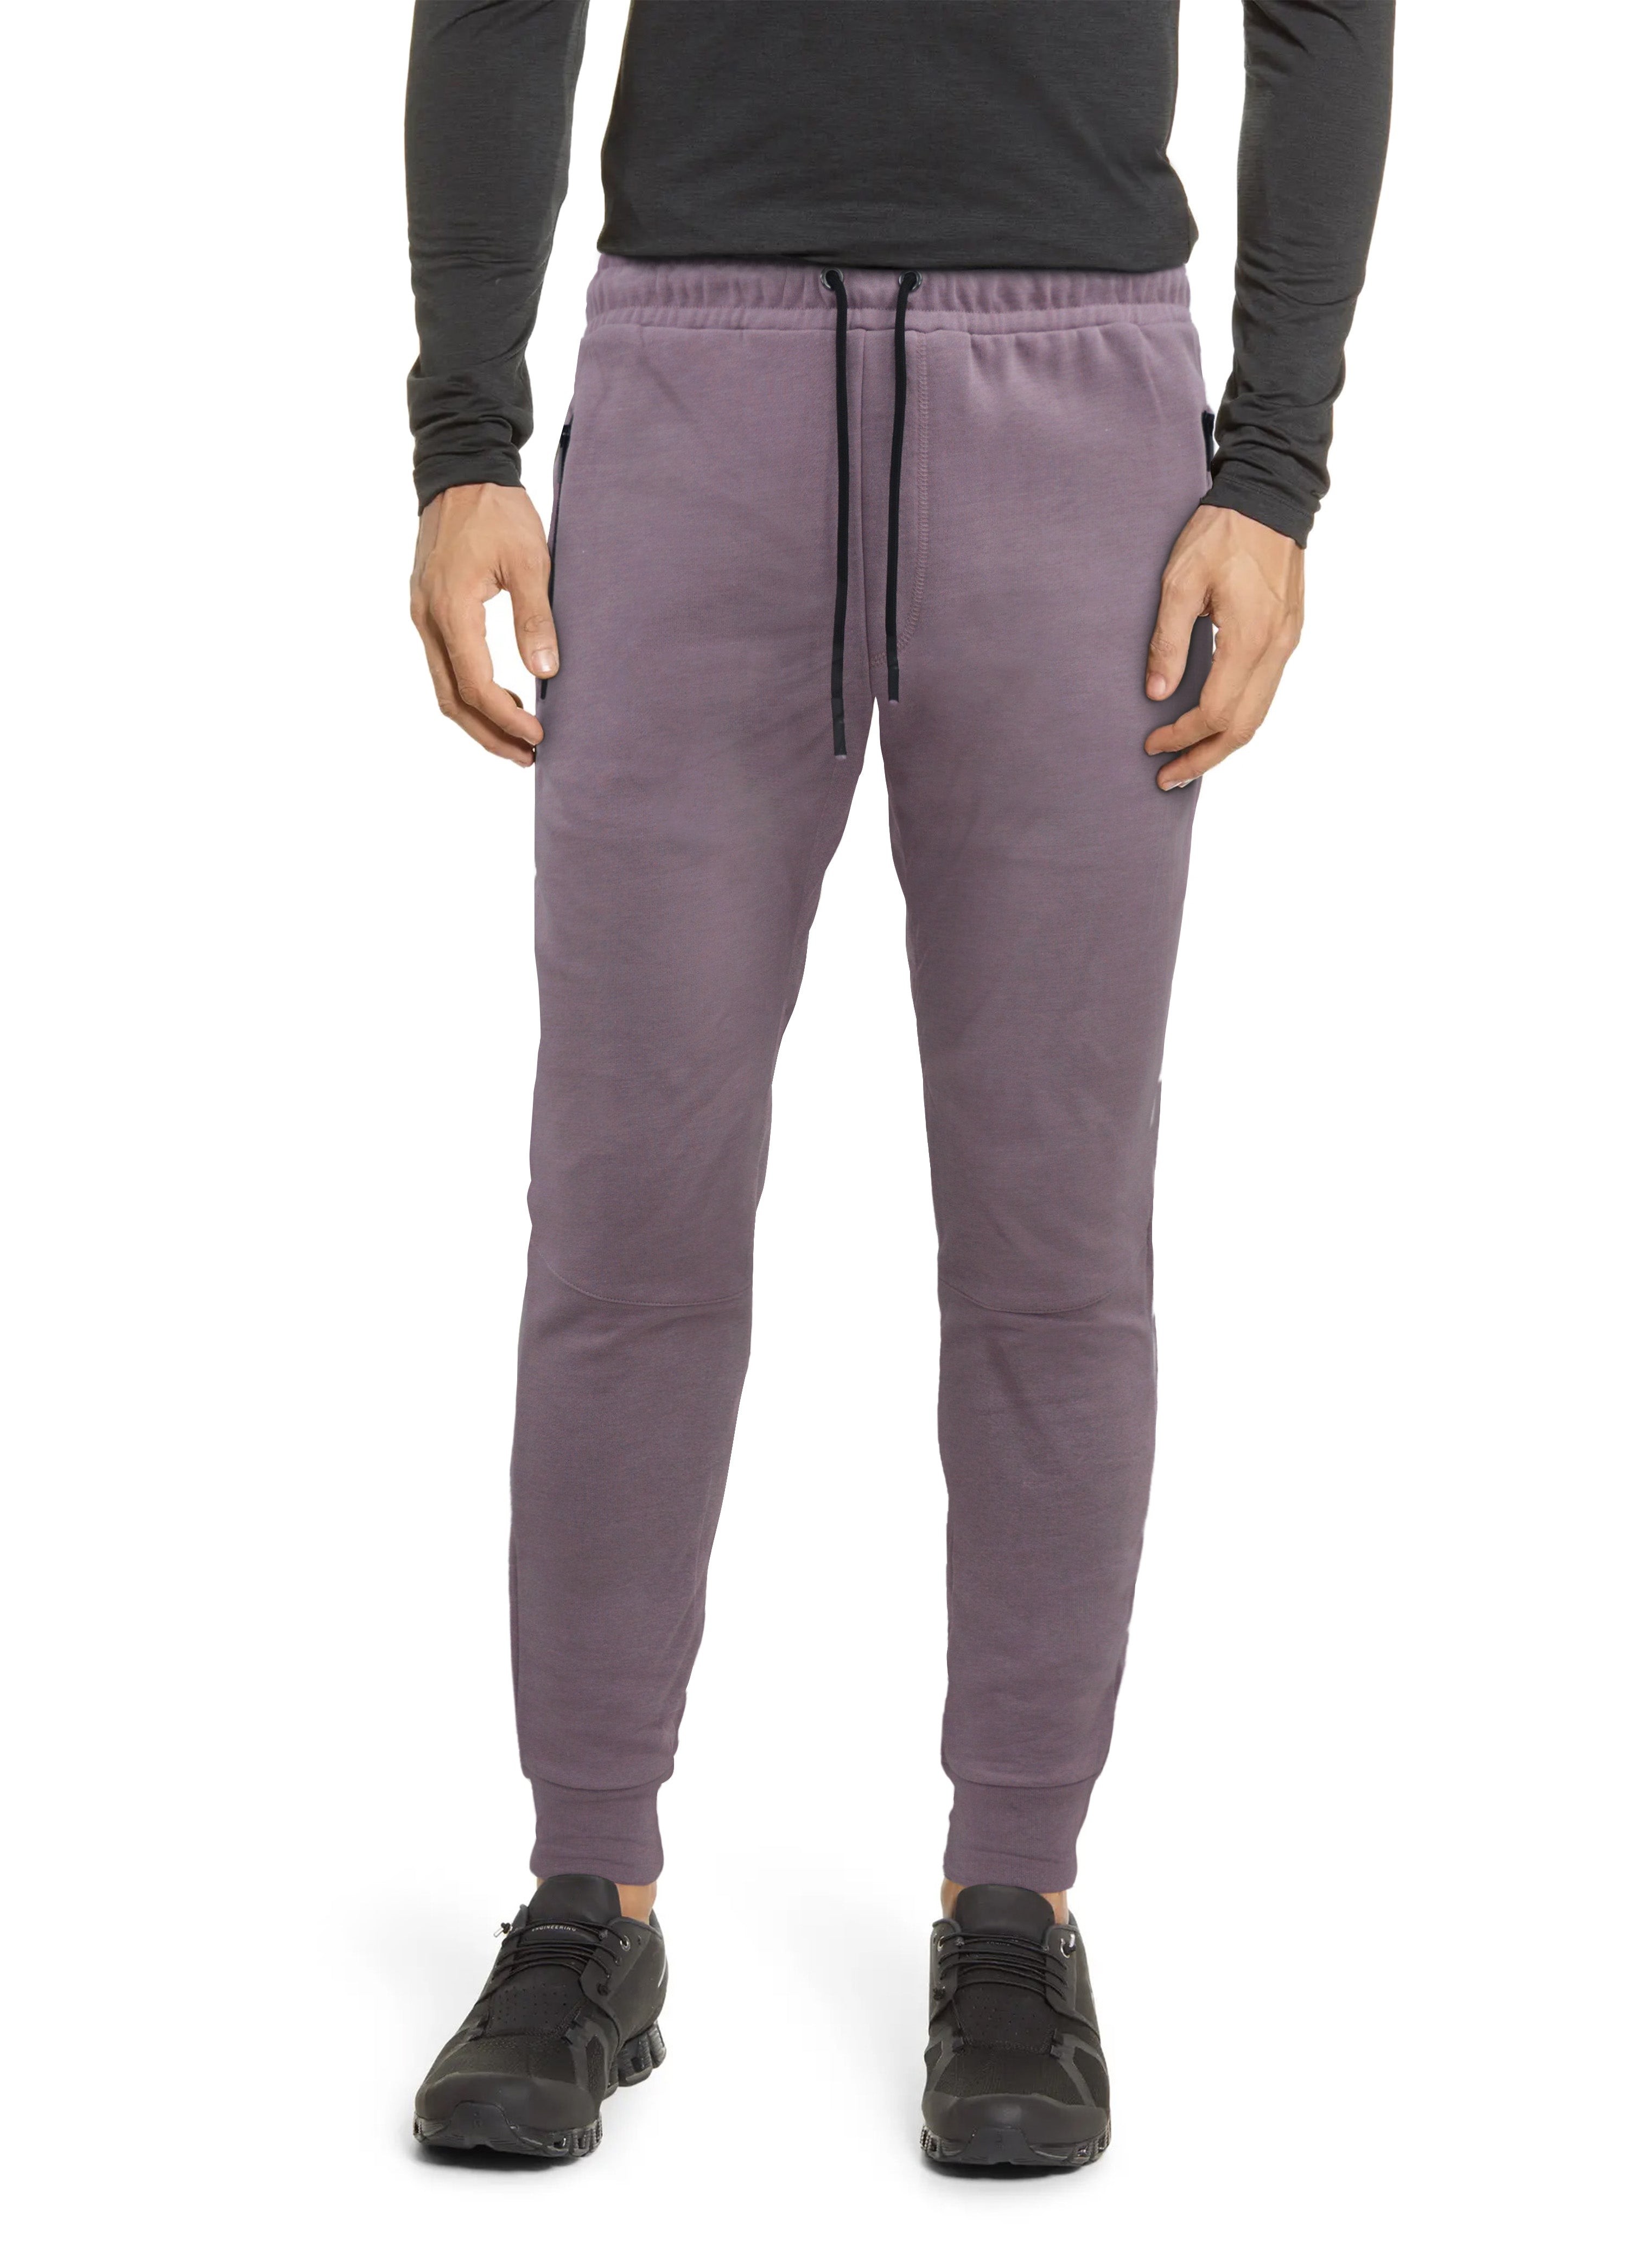 Purple Brand Jeans Mens Sweatpants Jogger Slim Fit Slim Leg 80080 $275 Size  XL